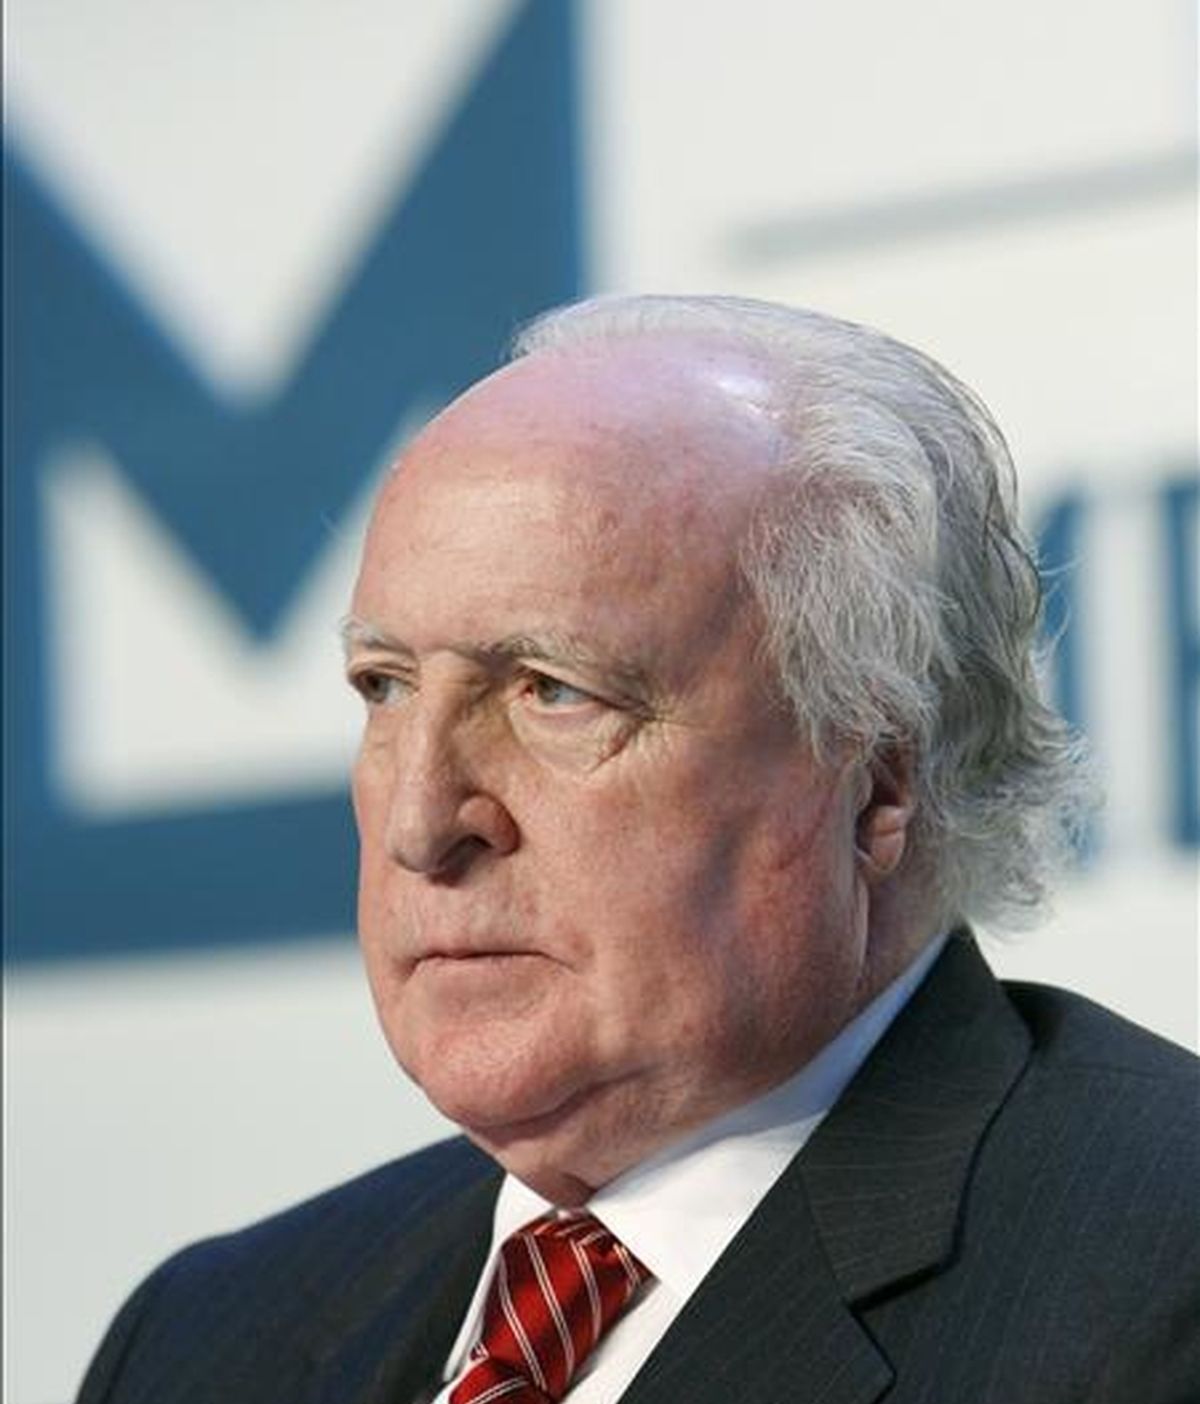 El presidente de Metrovacesa, Ramón Sanahuja. EFE/Archivo